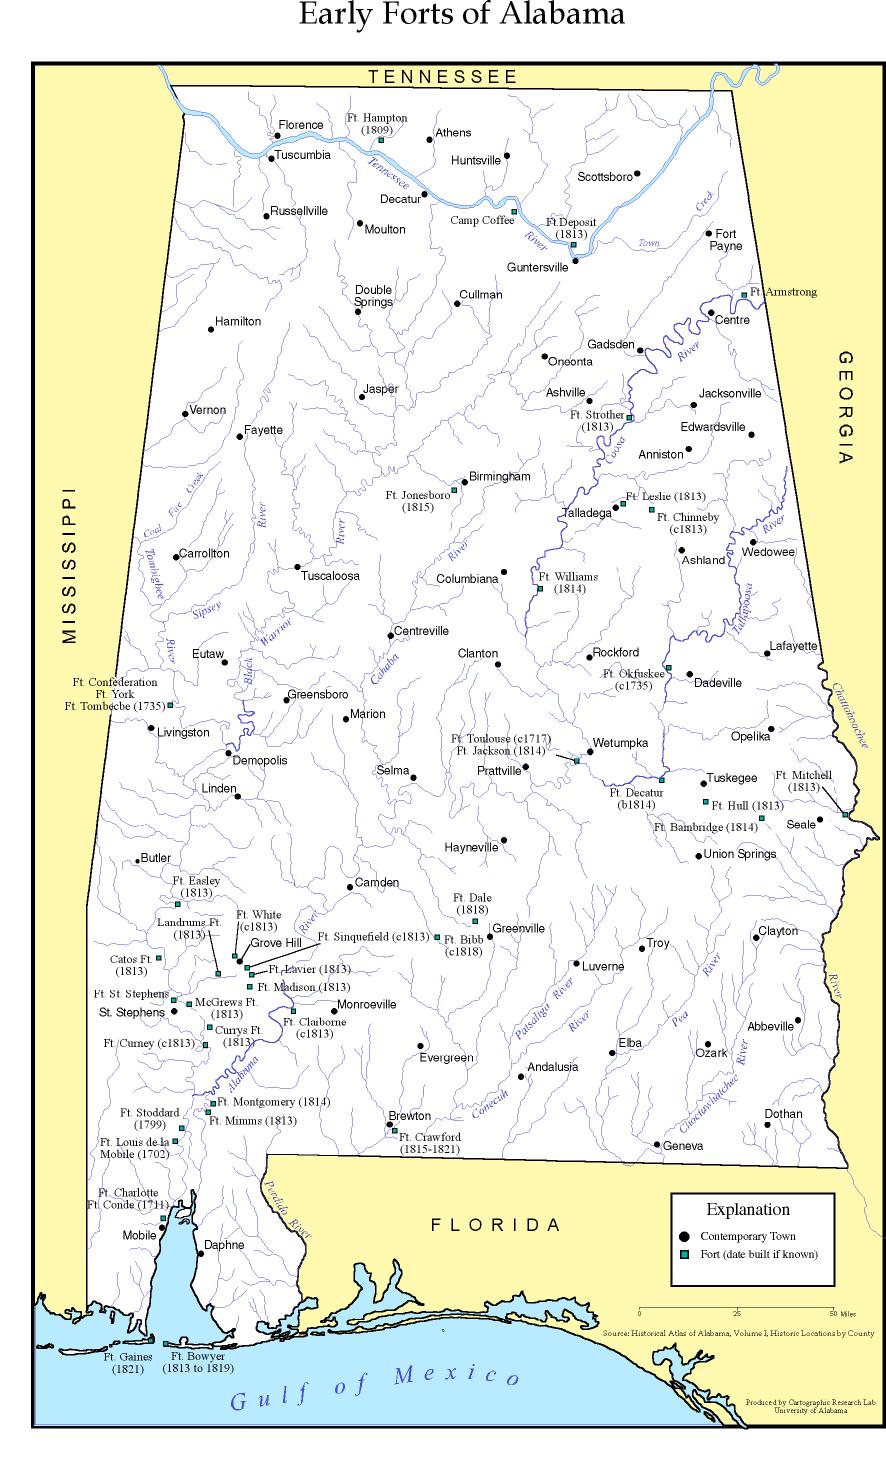 Alabama Railroads - Encyclopedia of Alabama